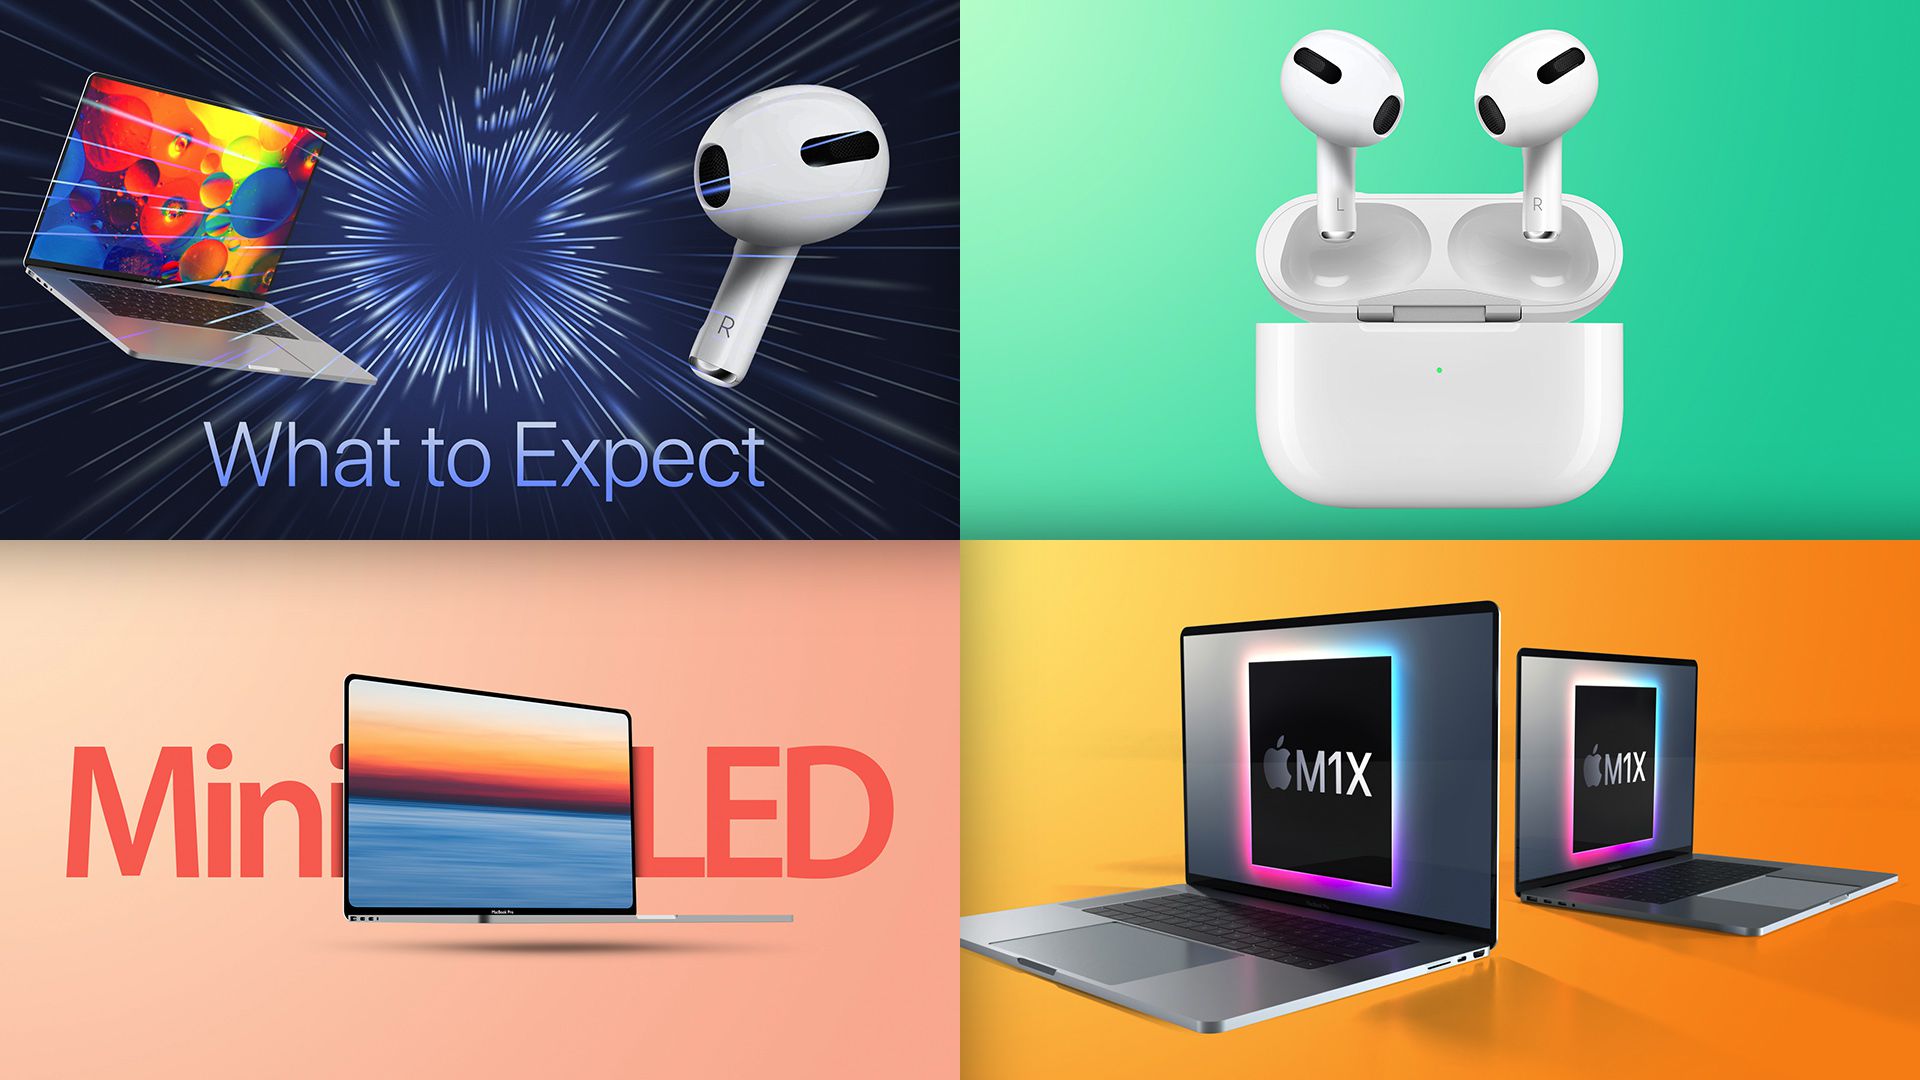 Top Stories: Apple Event Announced, M1X MacBook Pro Rumors, Apple Watch Series 7 Launch